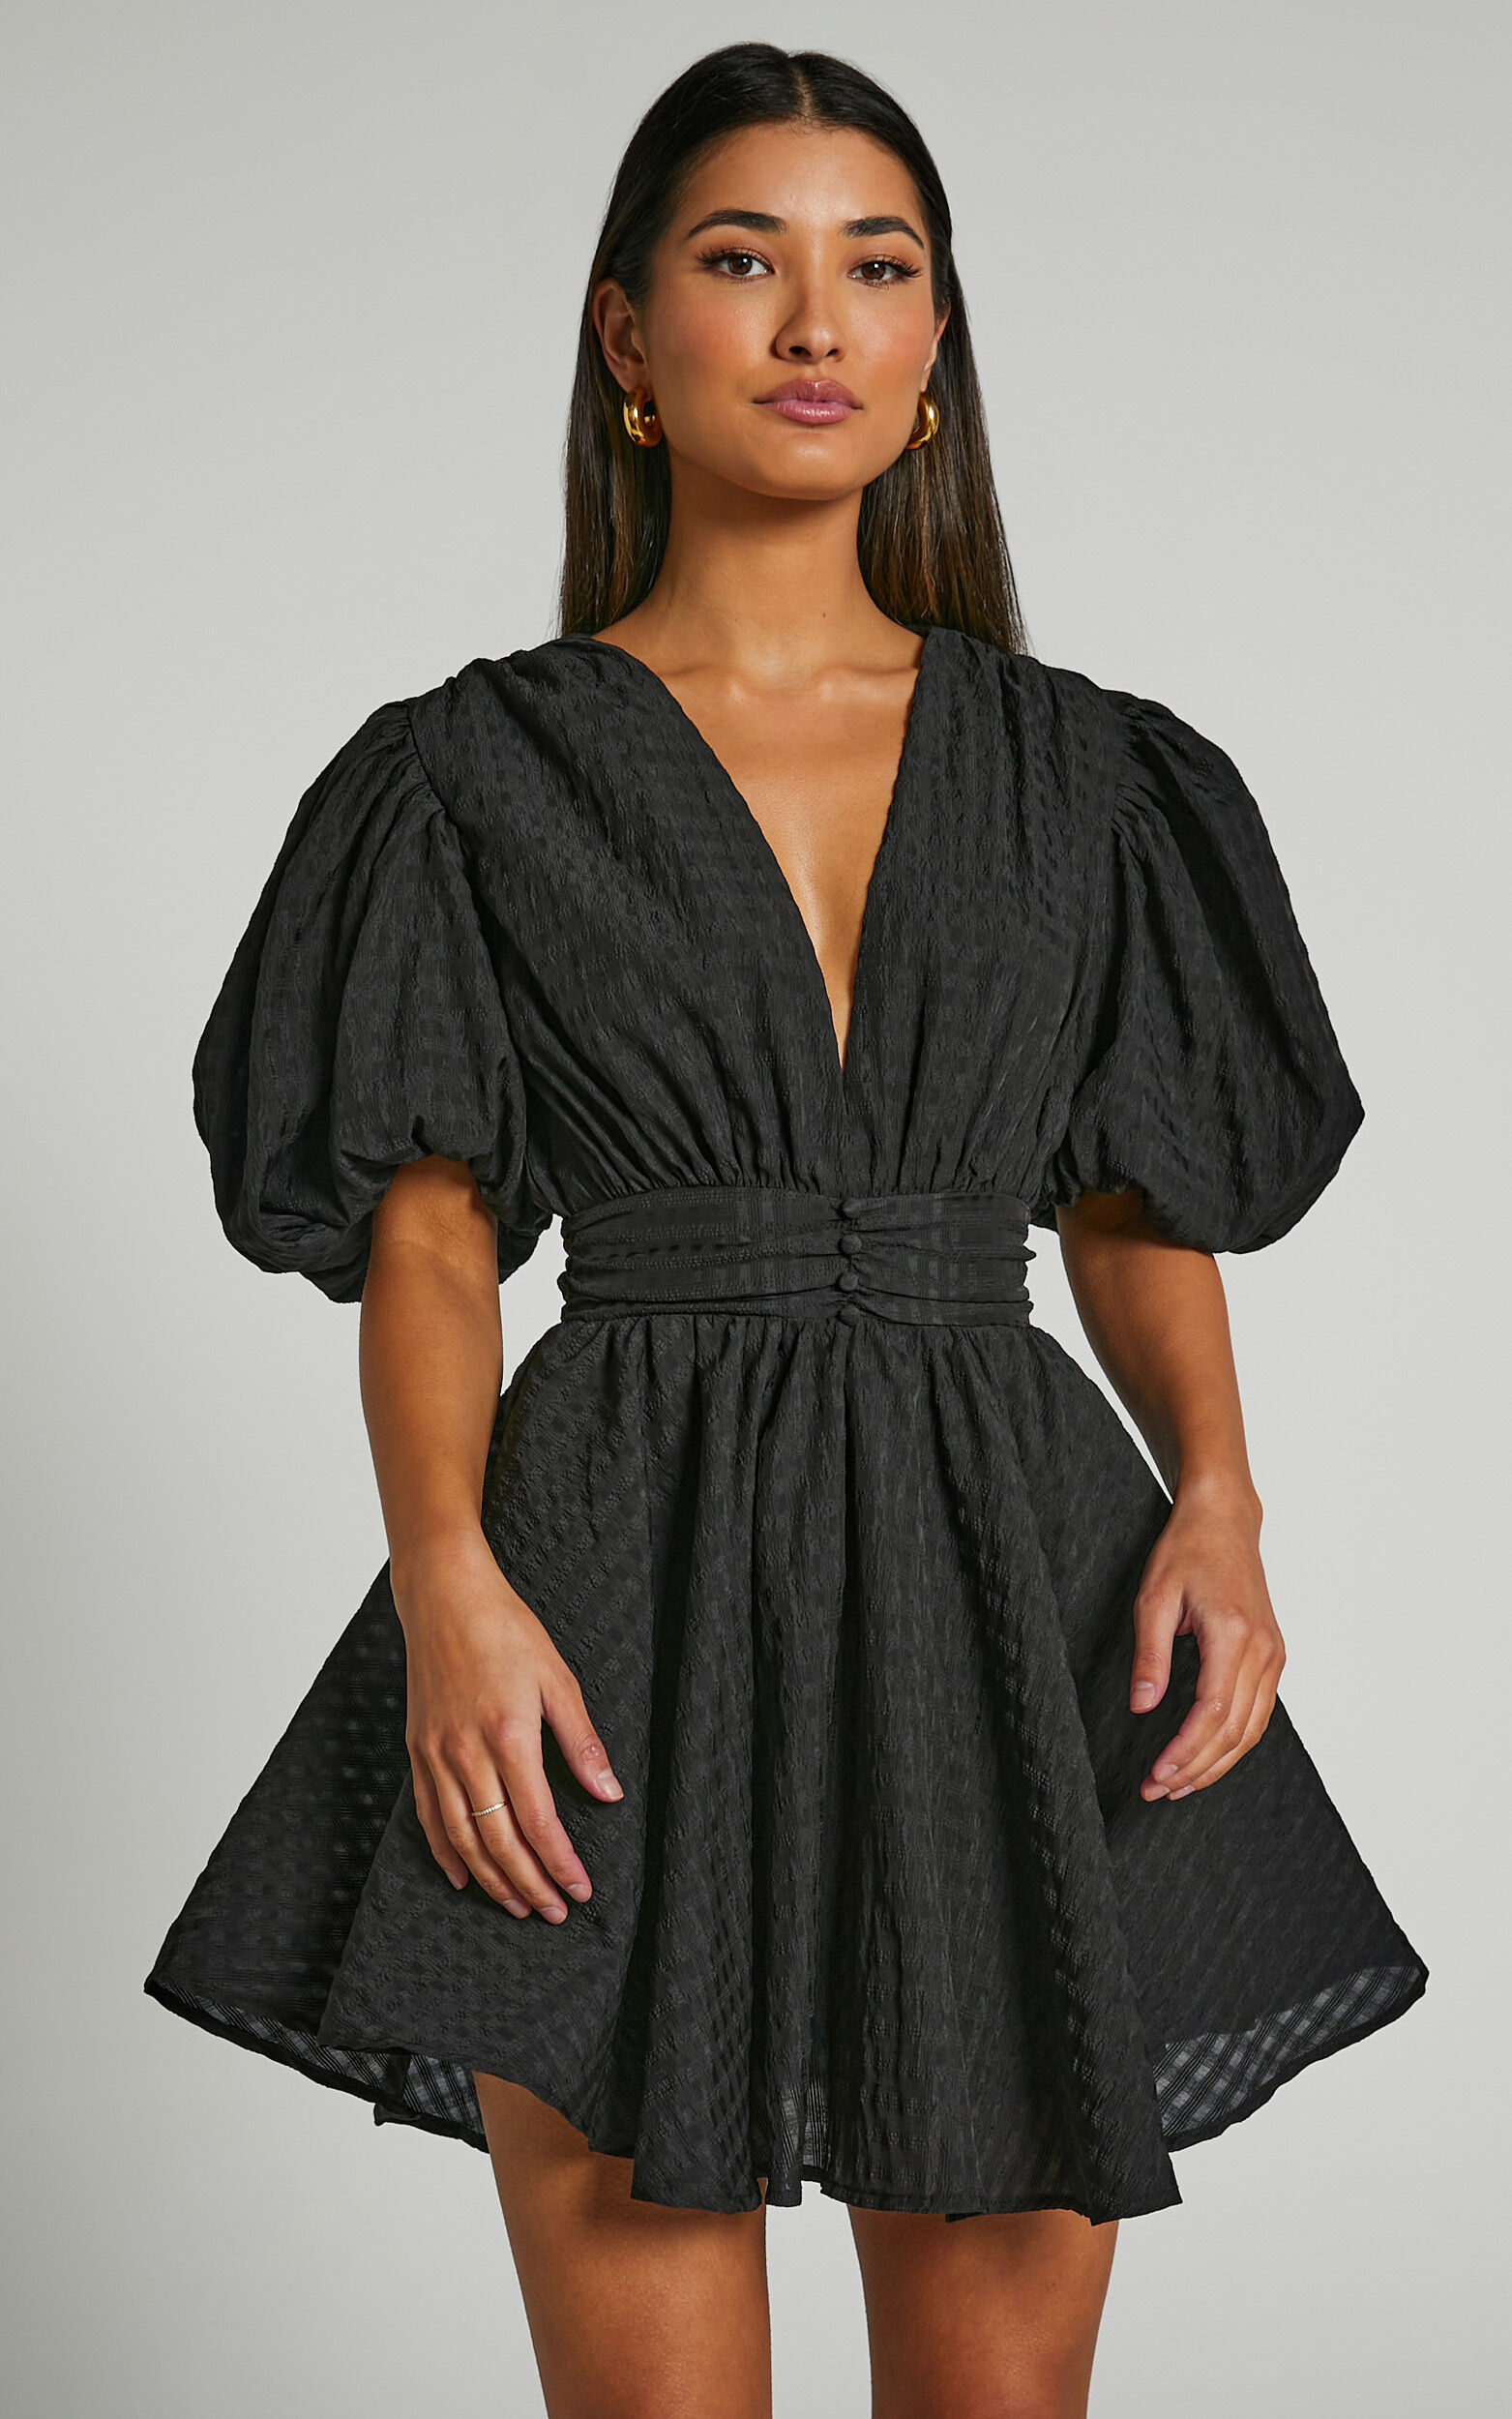 Xandy Mini Dress - Textured Puff Sleeve Plunge Dress in Black - 04, BLK1